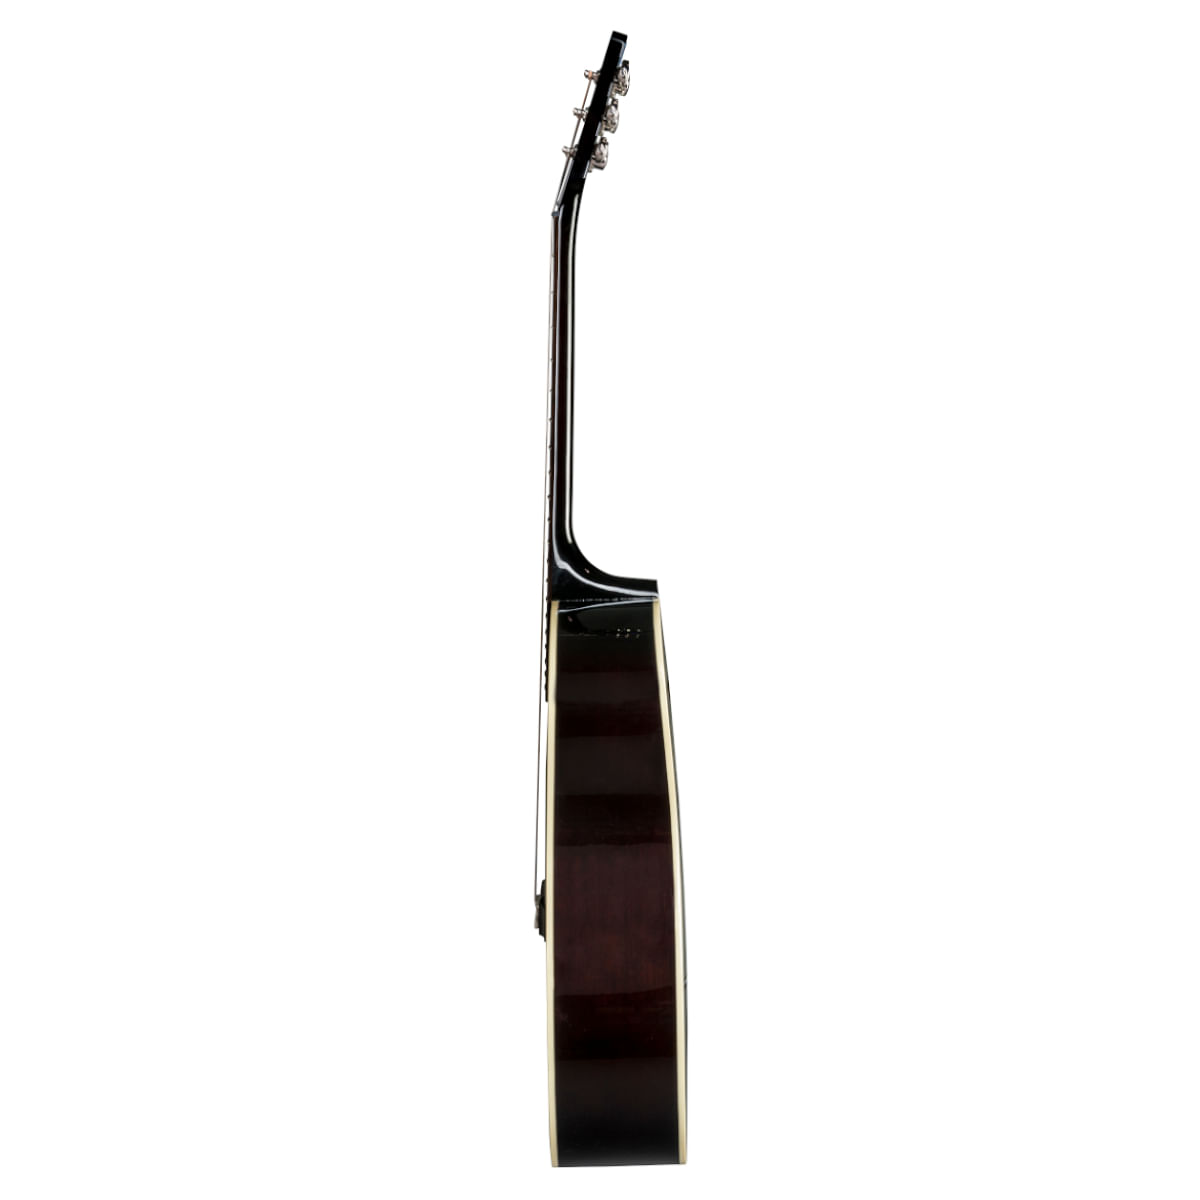 Buy Gibson, Acoustic Guitar, Standard, J-45 -Vintage Sunburst 